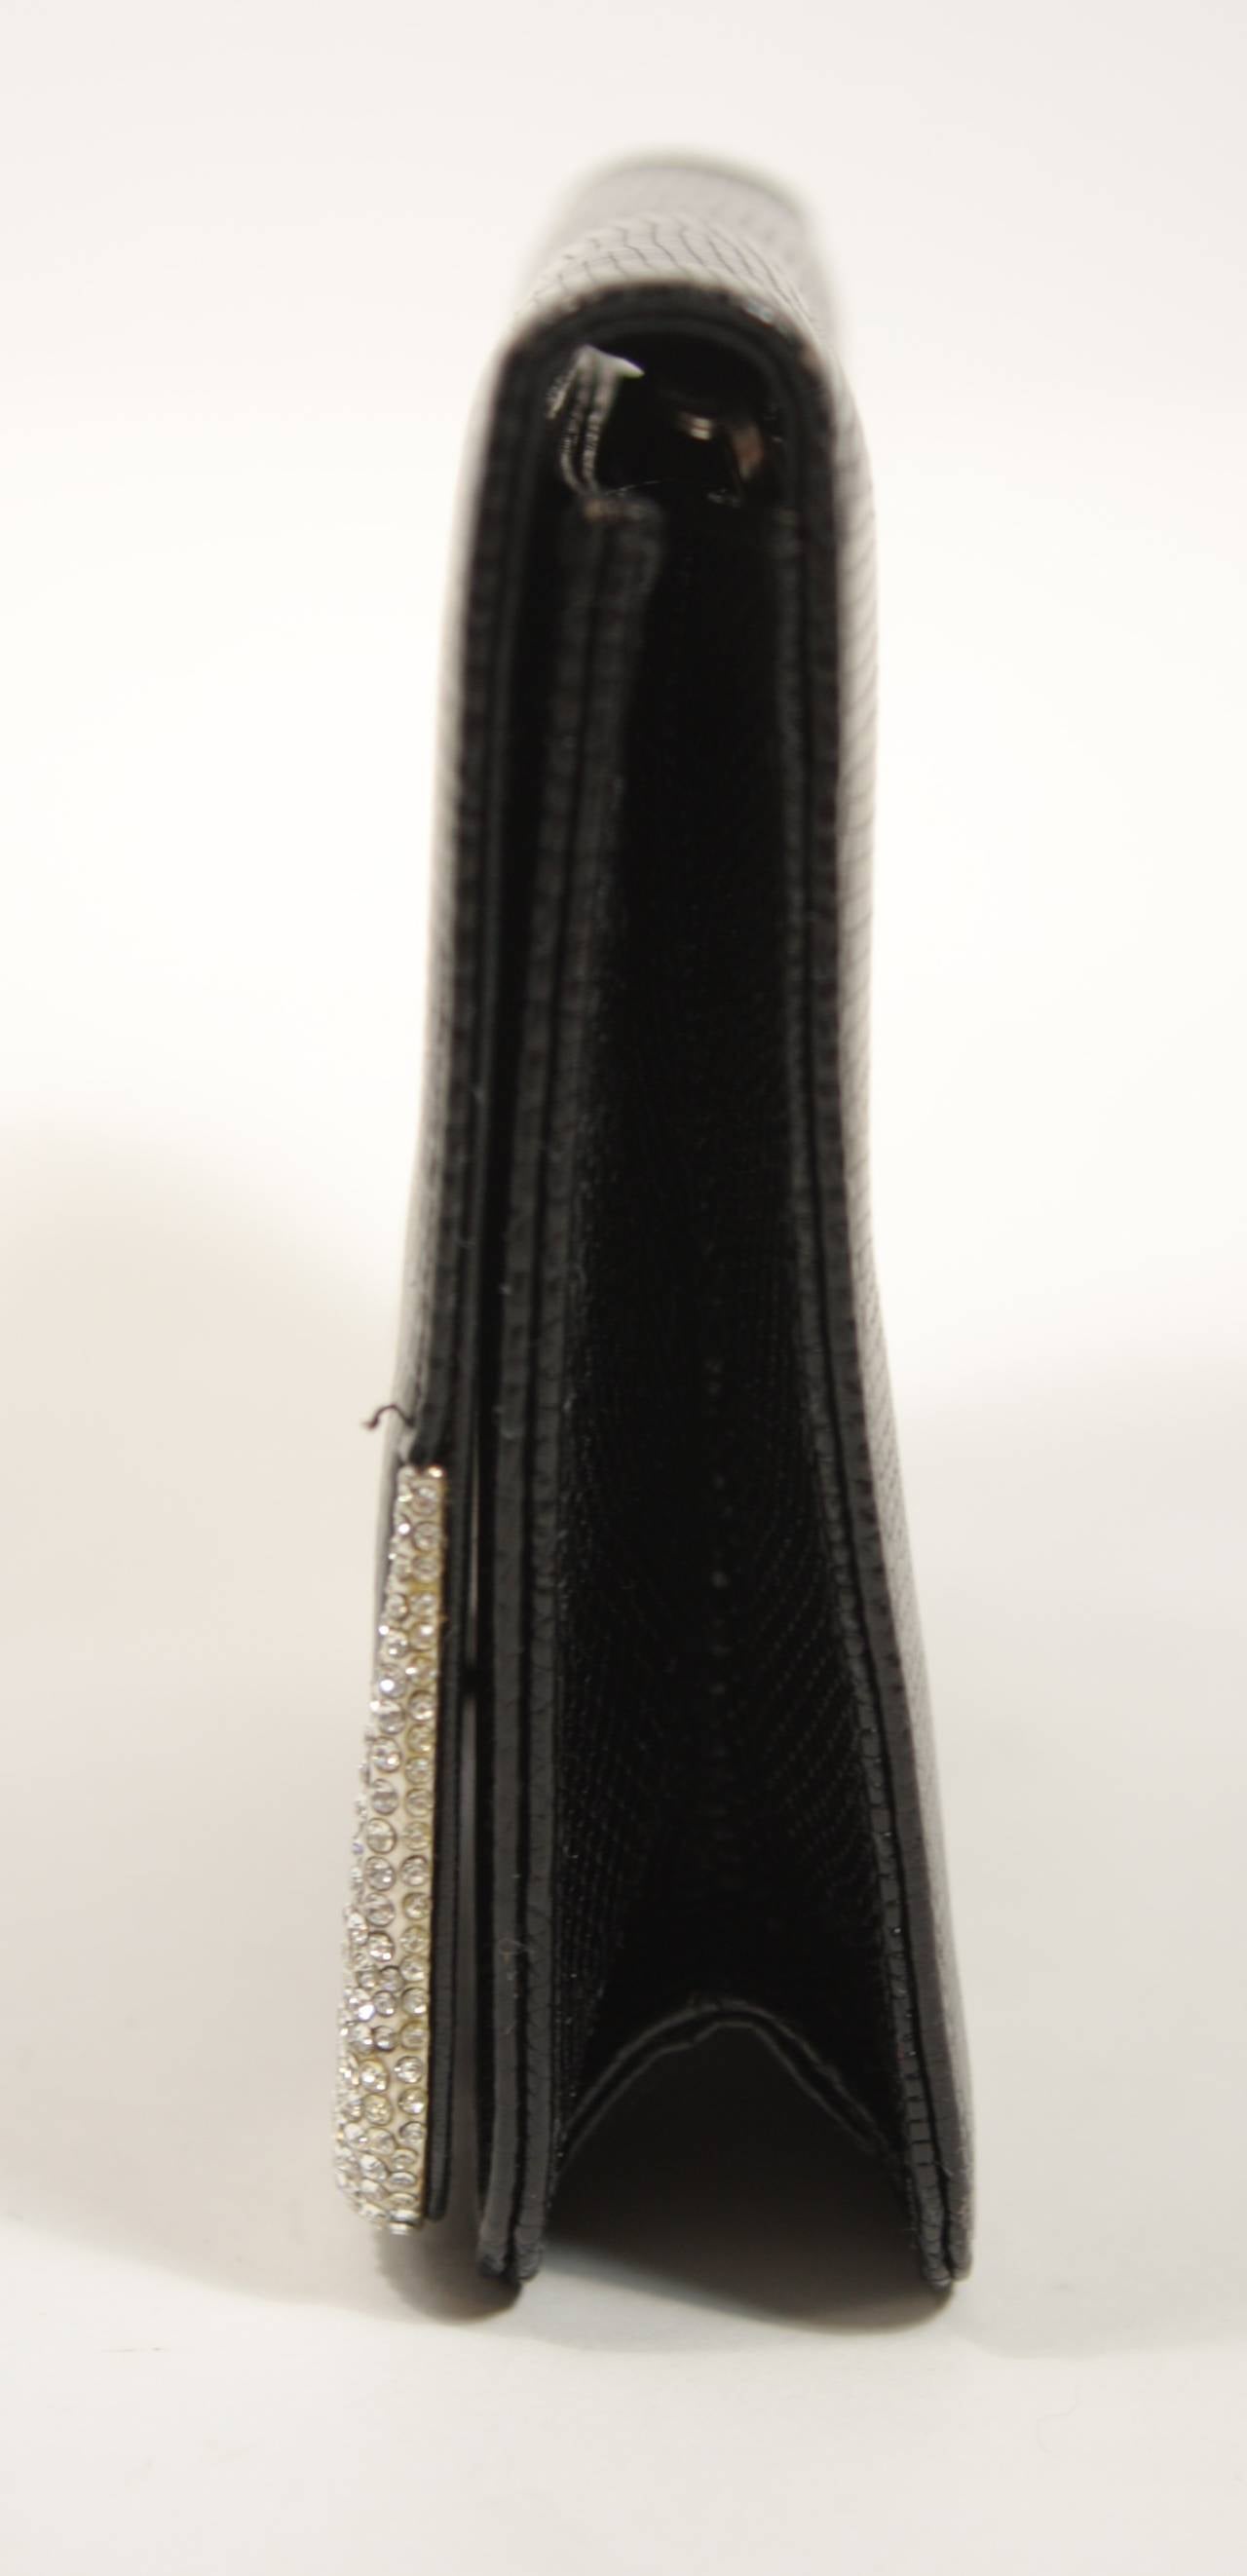 Valentino Garavani Black Lizard Evening Clutch Rhinestone detail & Chain Strap 1